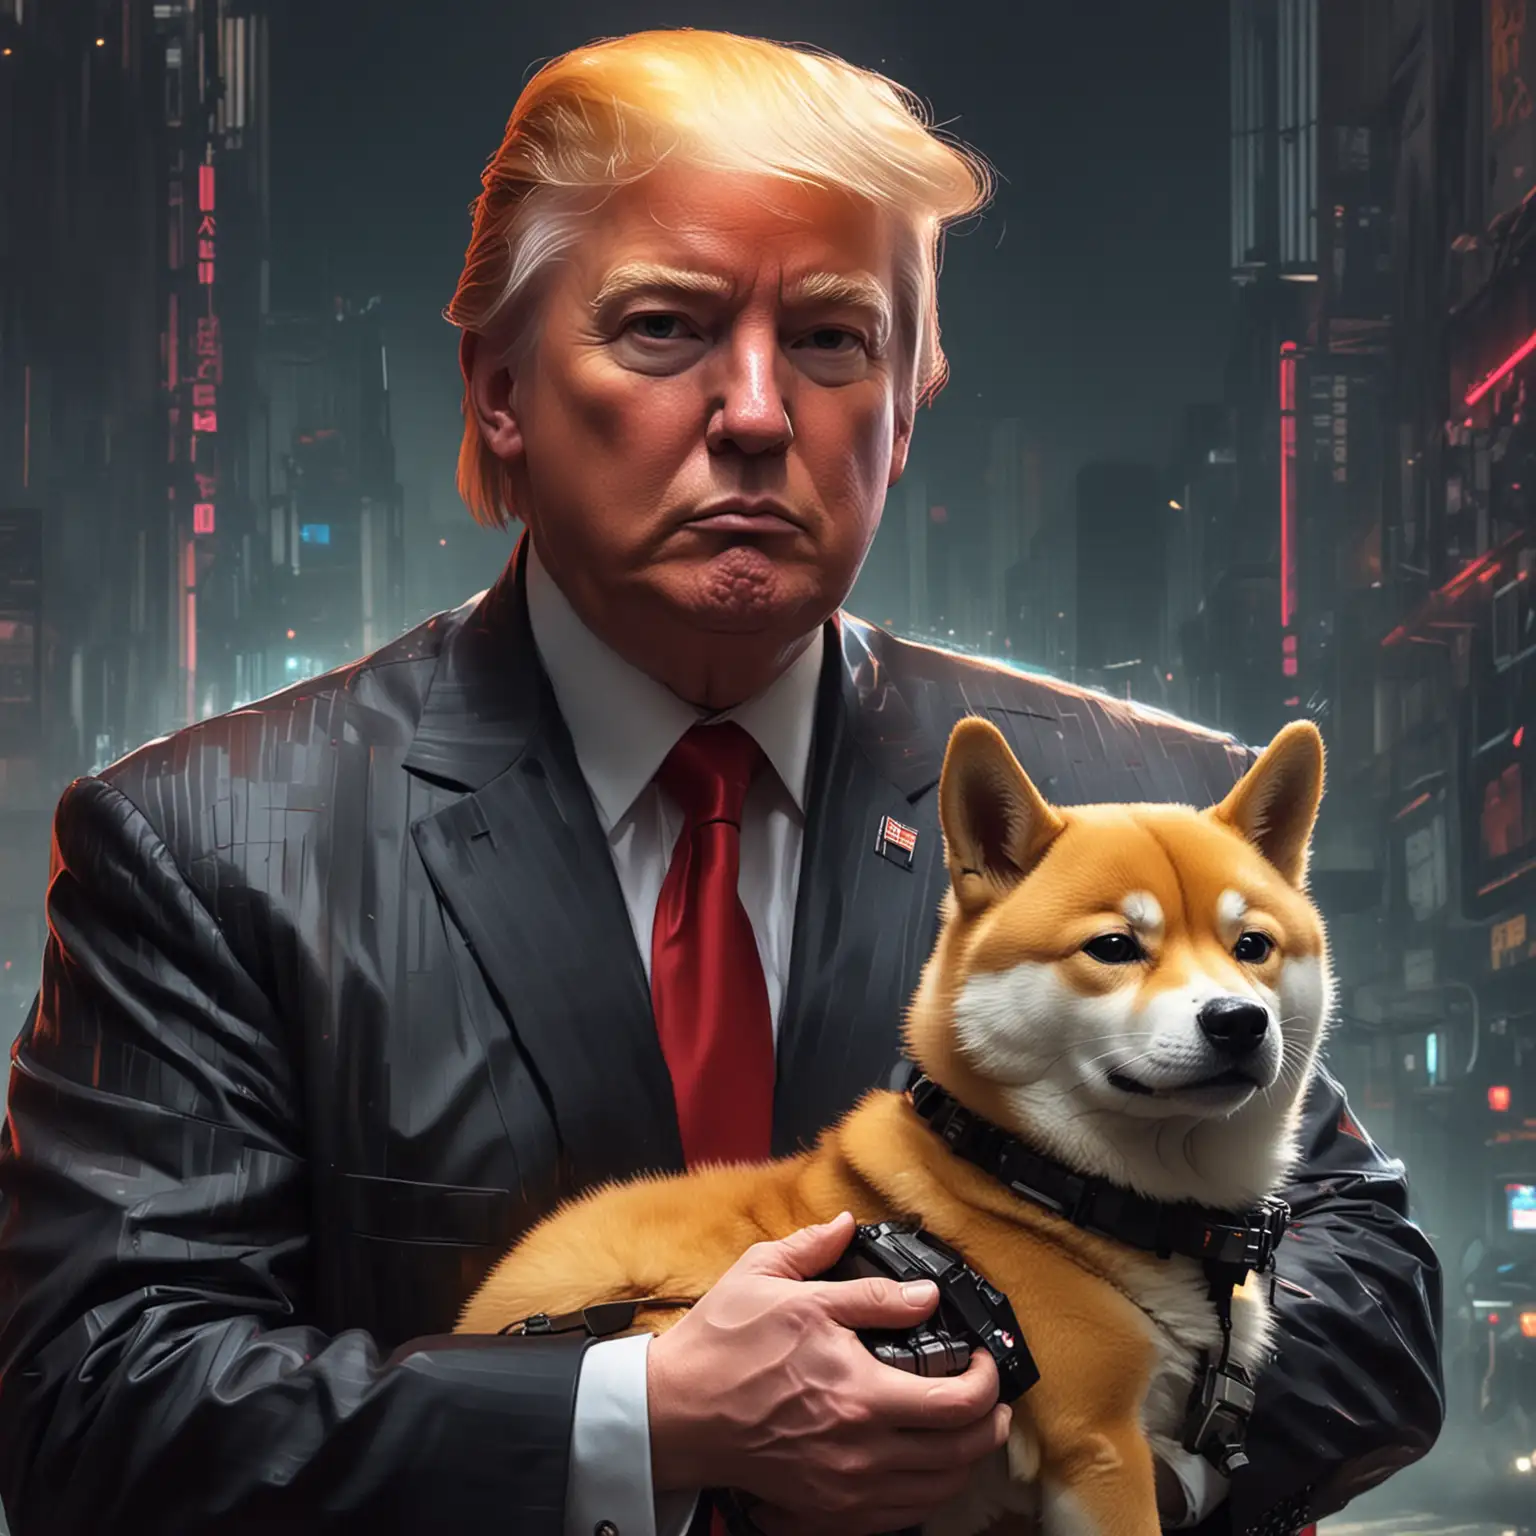 Donald-Trump-Cyberpunk-Portrait-with-Shiba-Inu-Companion